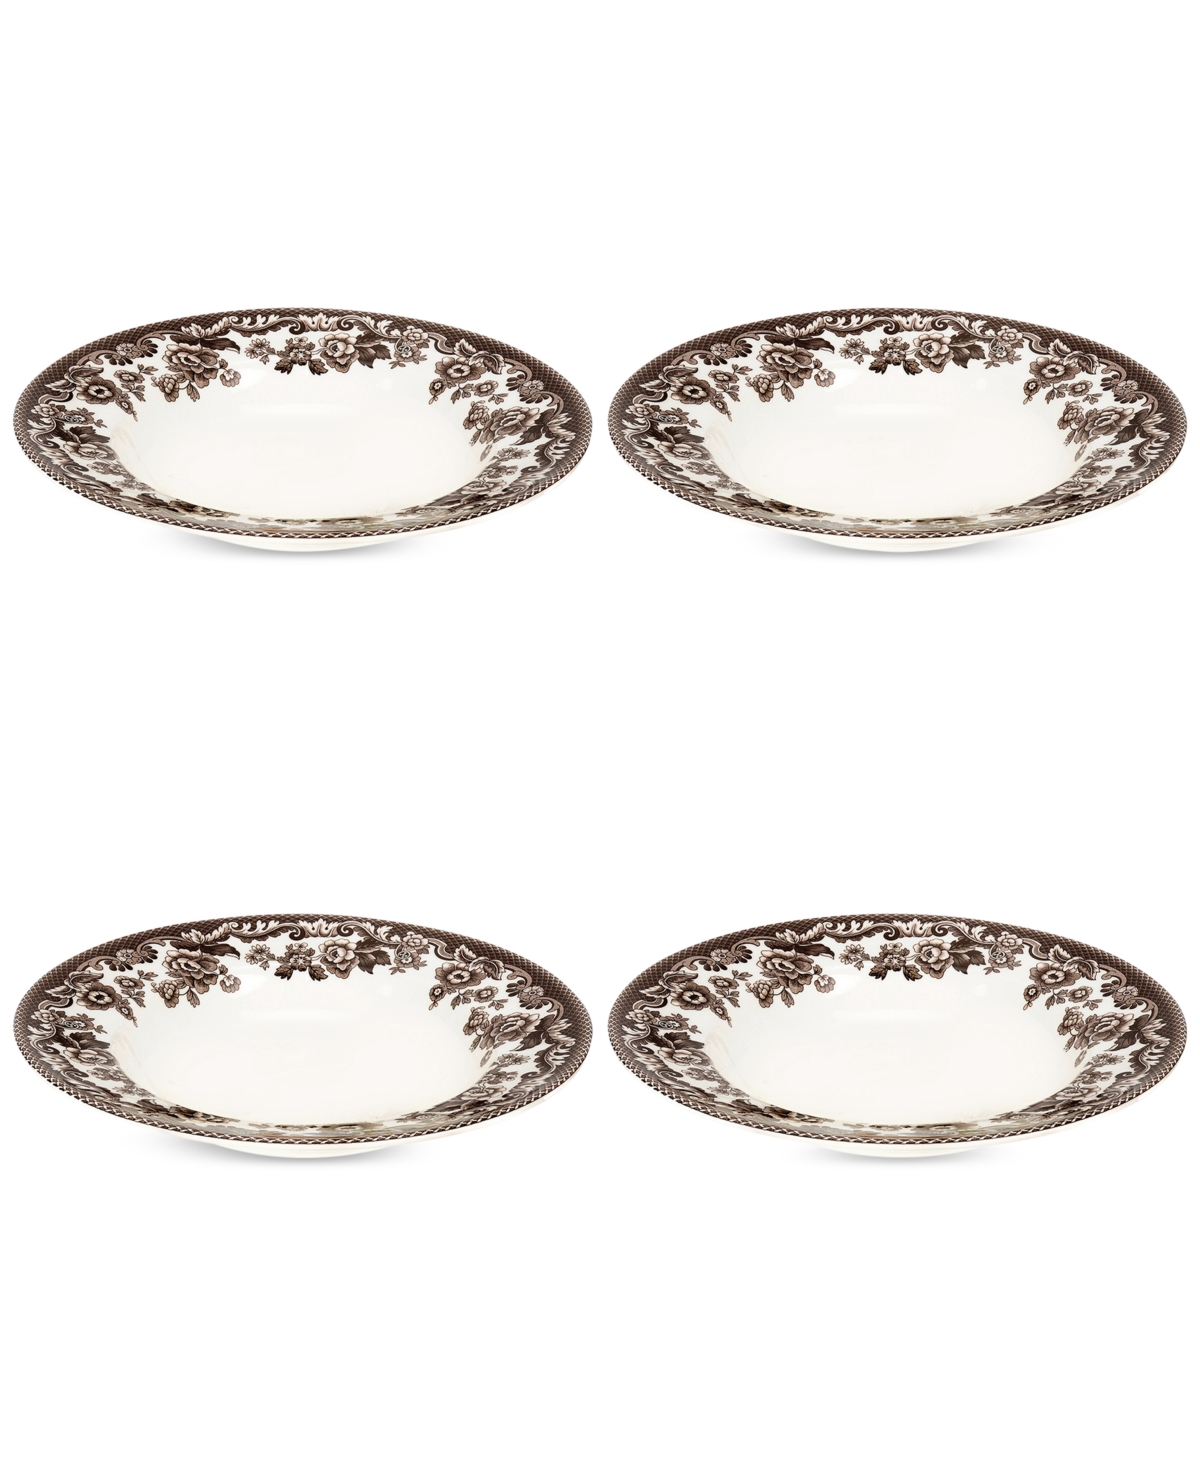 Delamere Soup Plates, Set of 4 - Brown